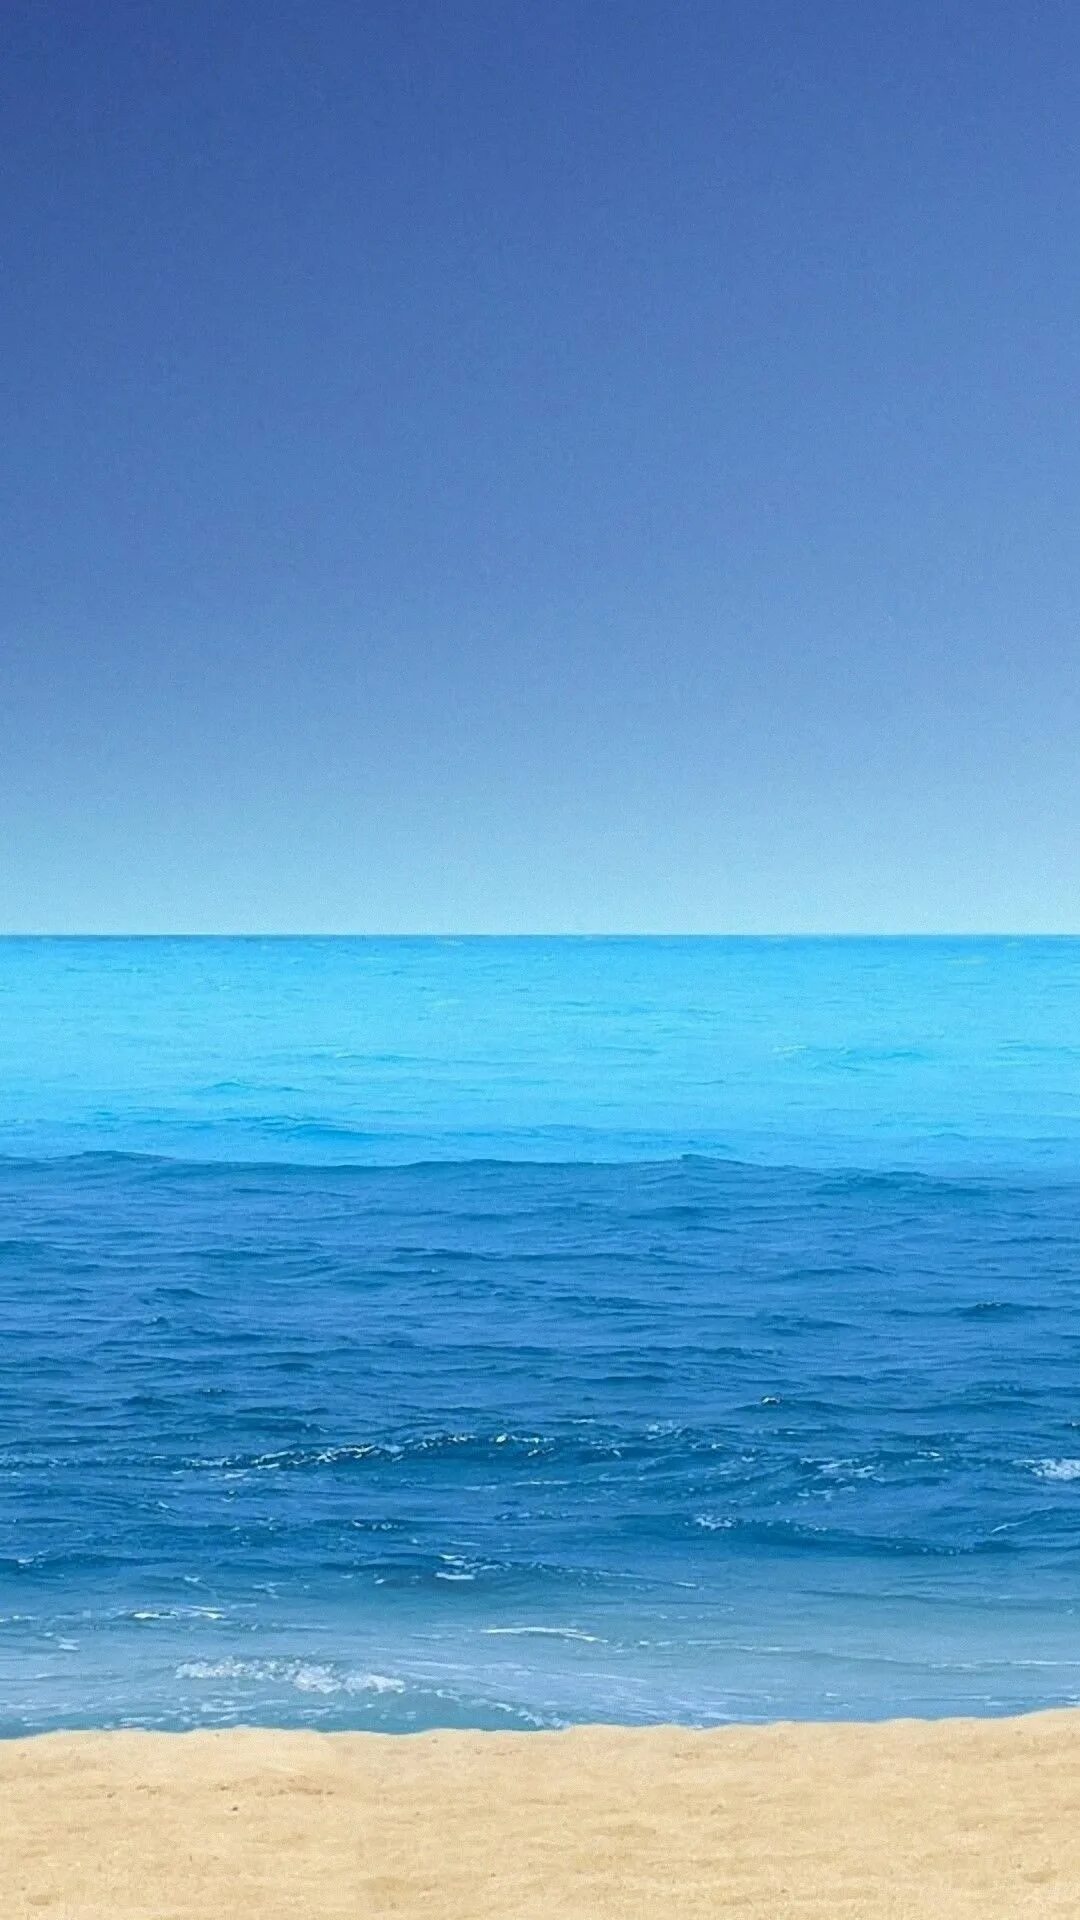 Фон море. Голубое море. Изображение моря. Бирюзовое море.